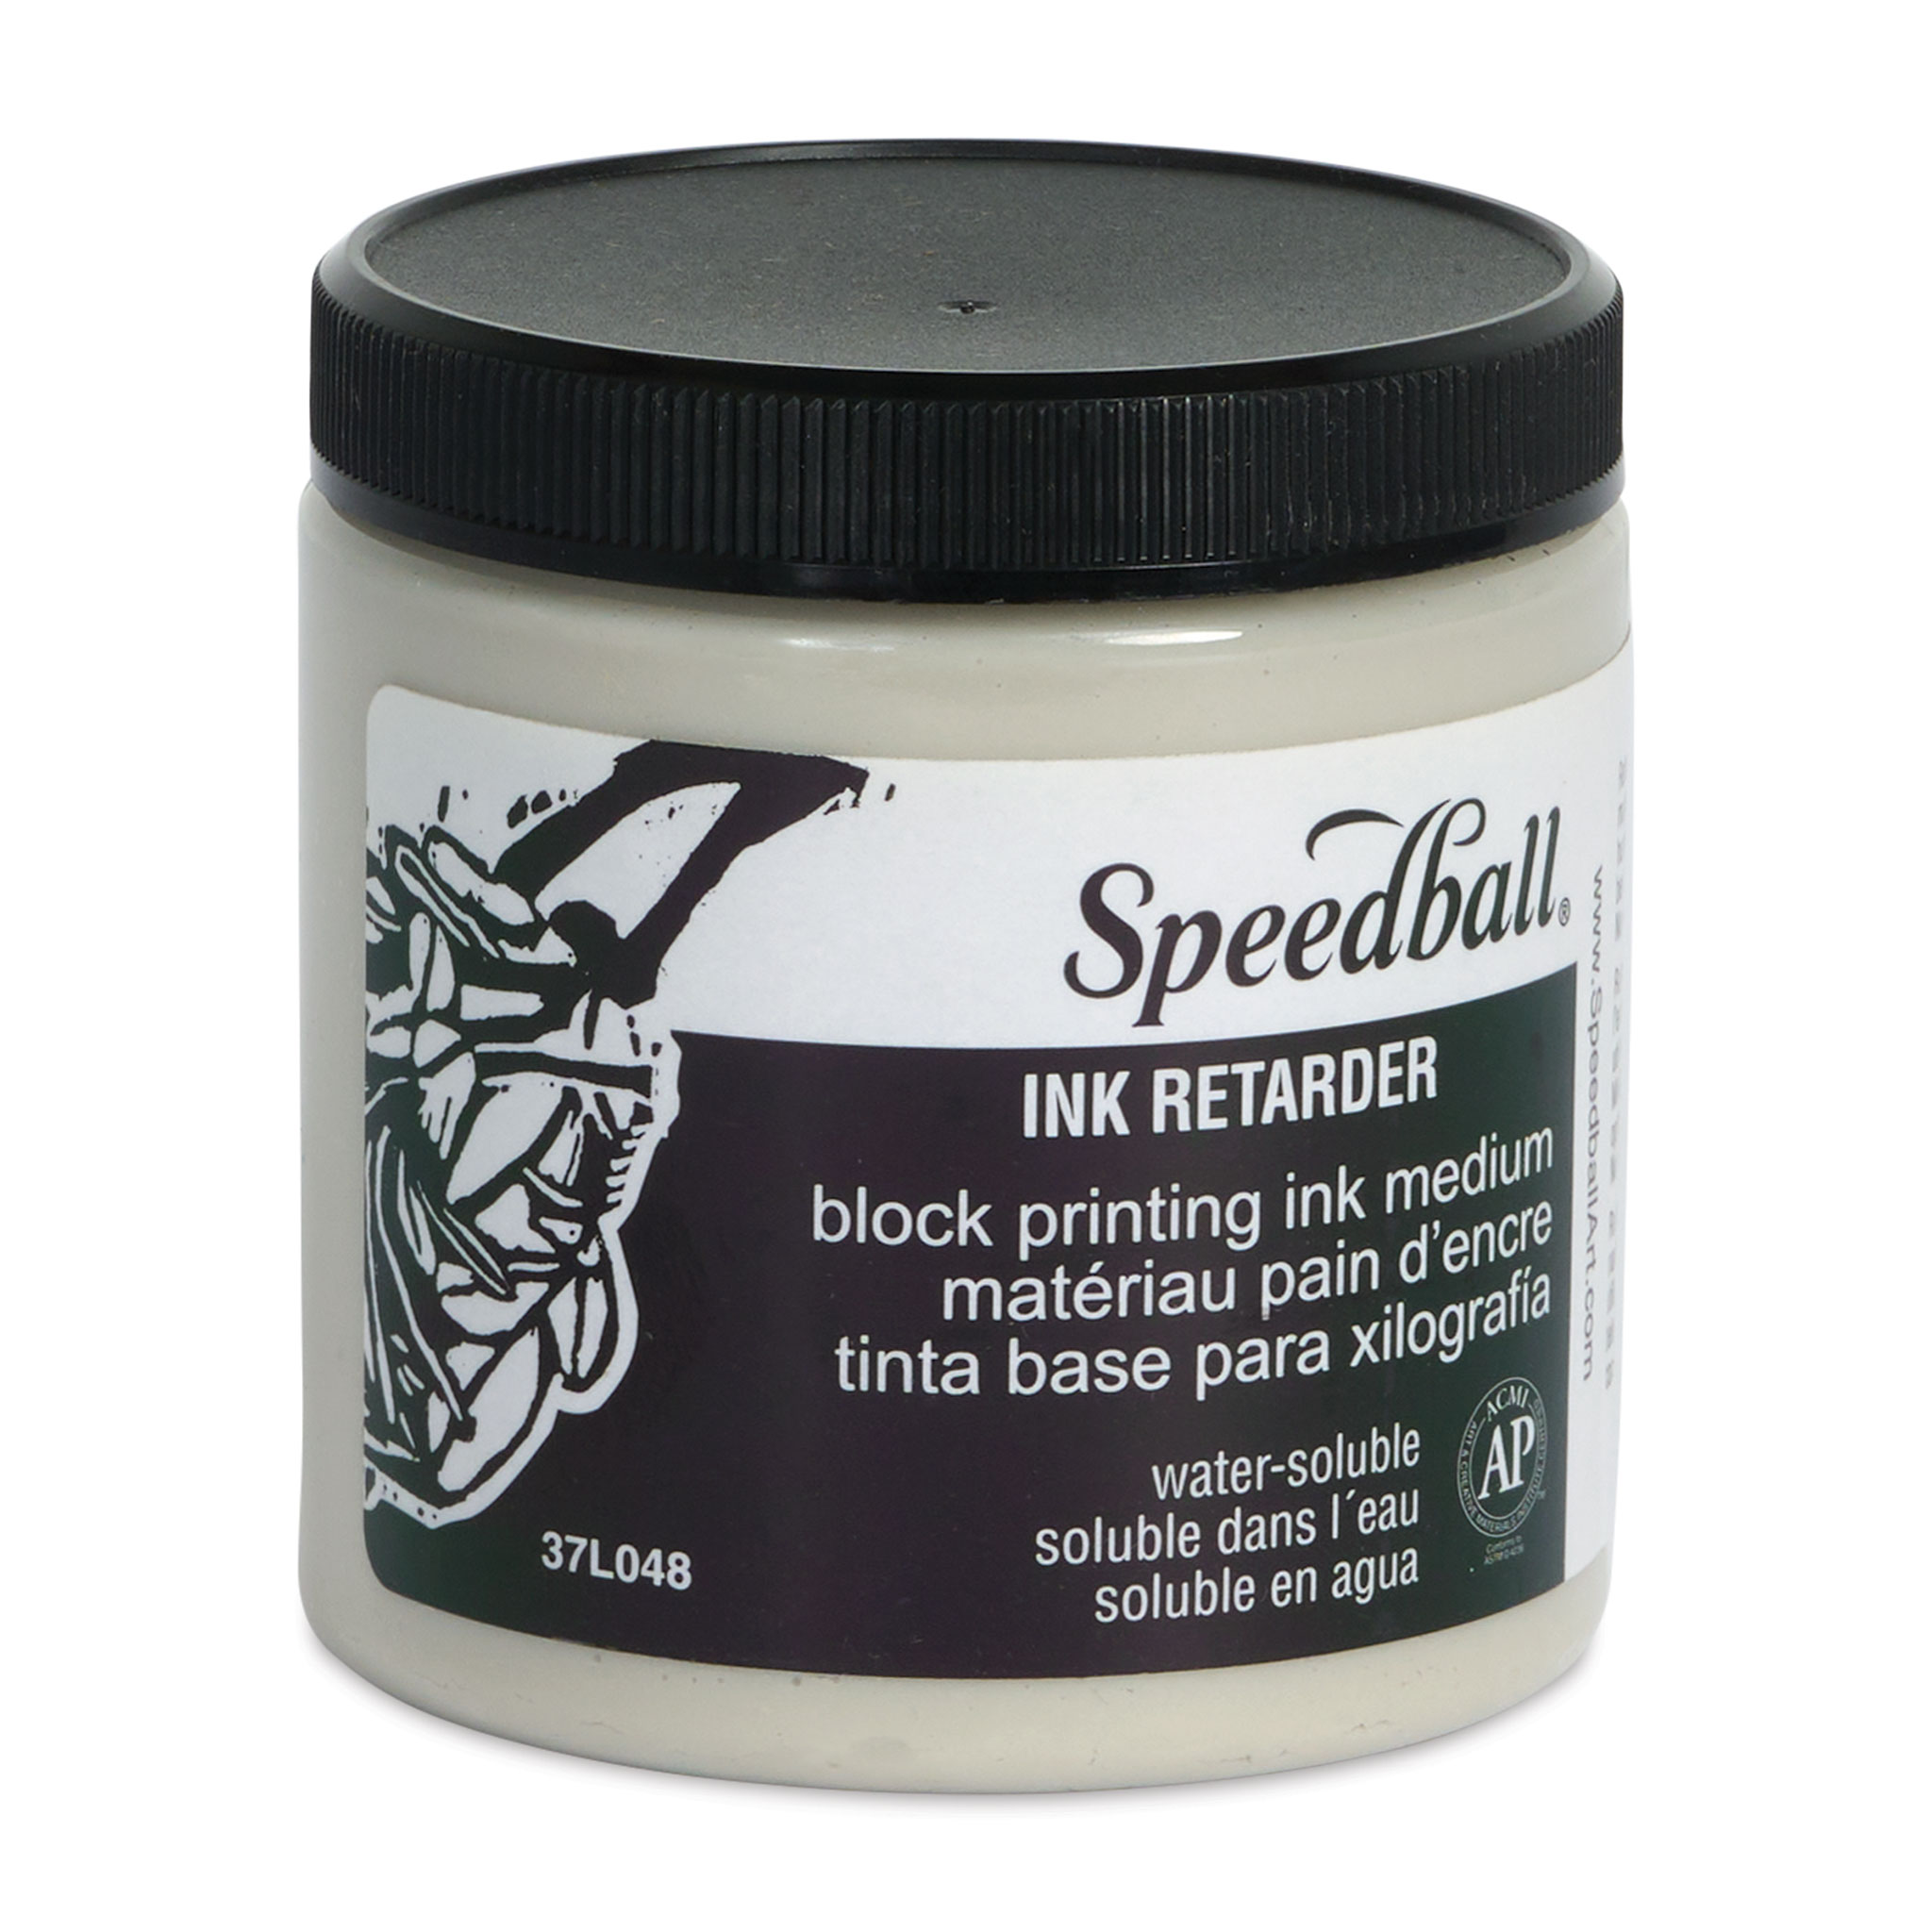 Speedball Water-Soluble Block Printing Ink - Retarder 8 oz.